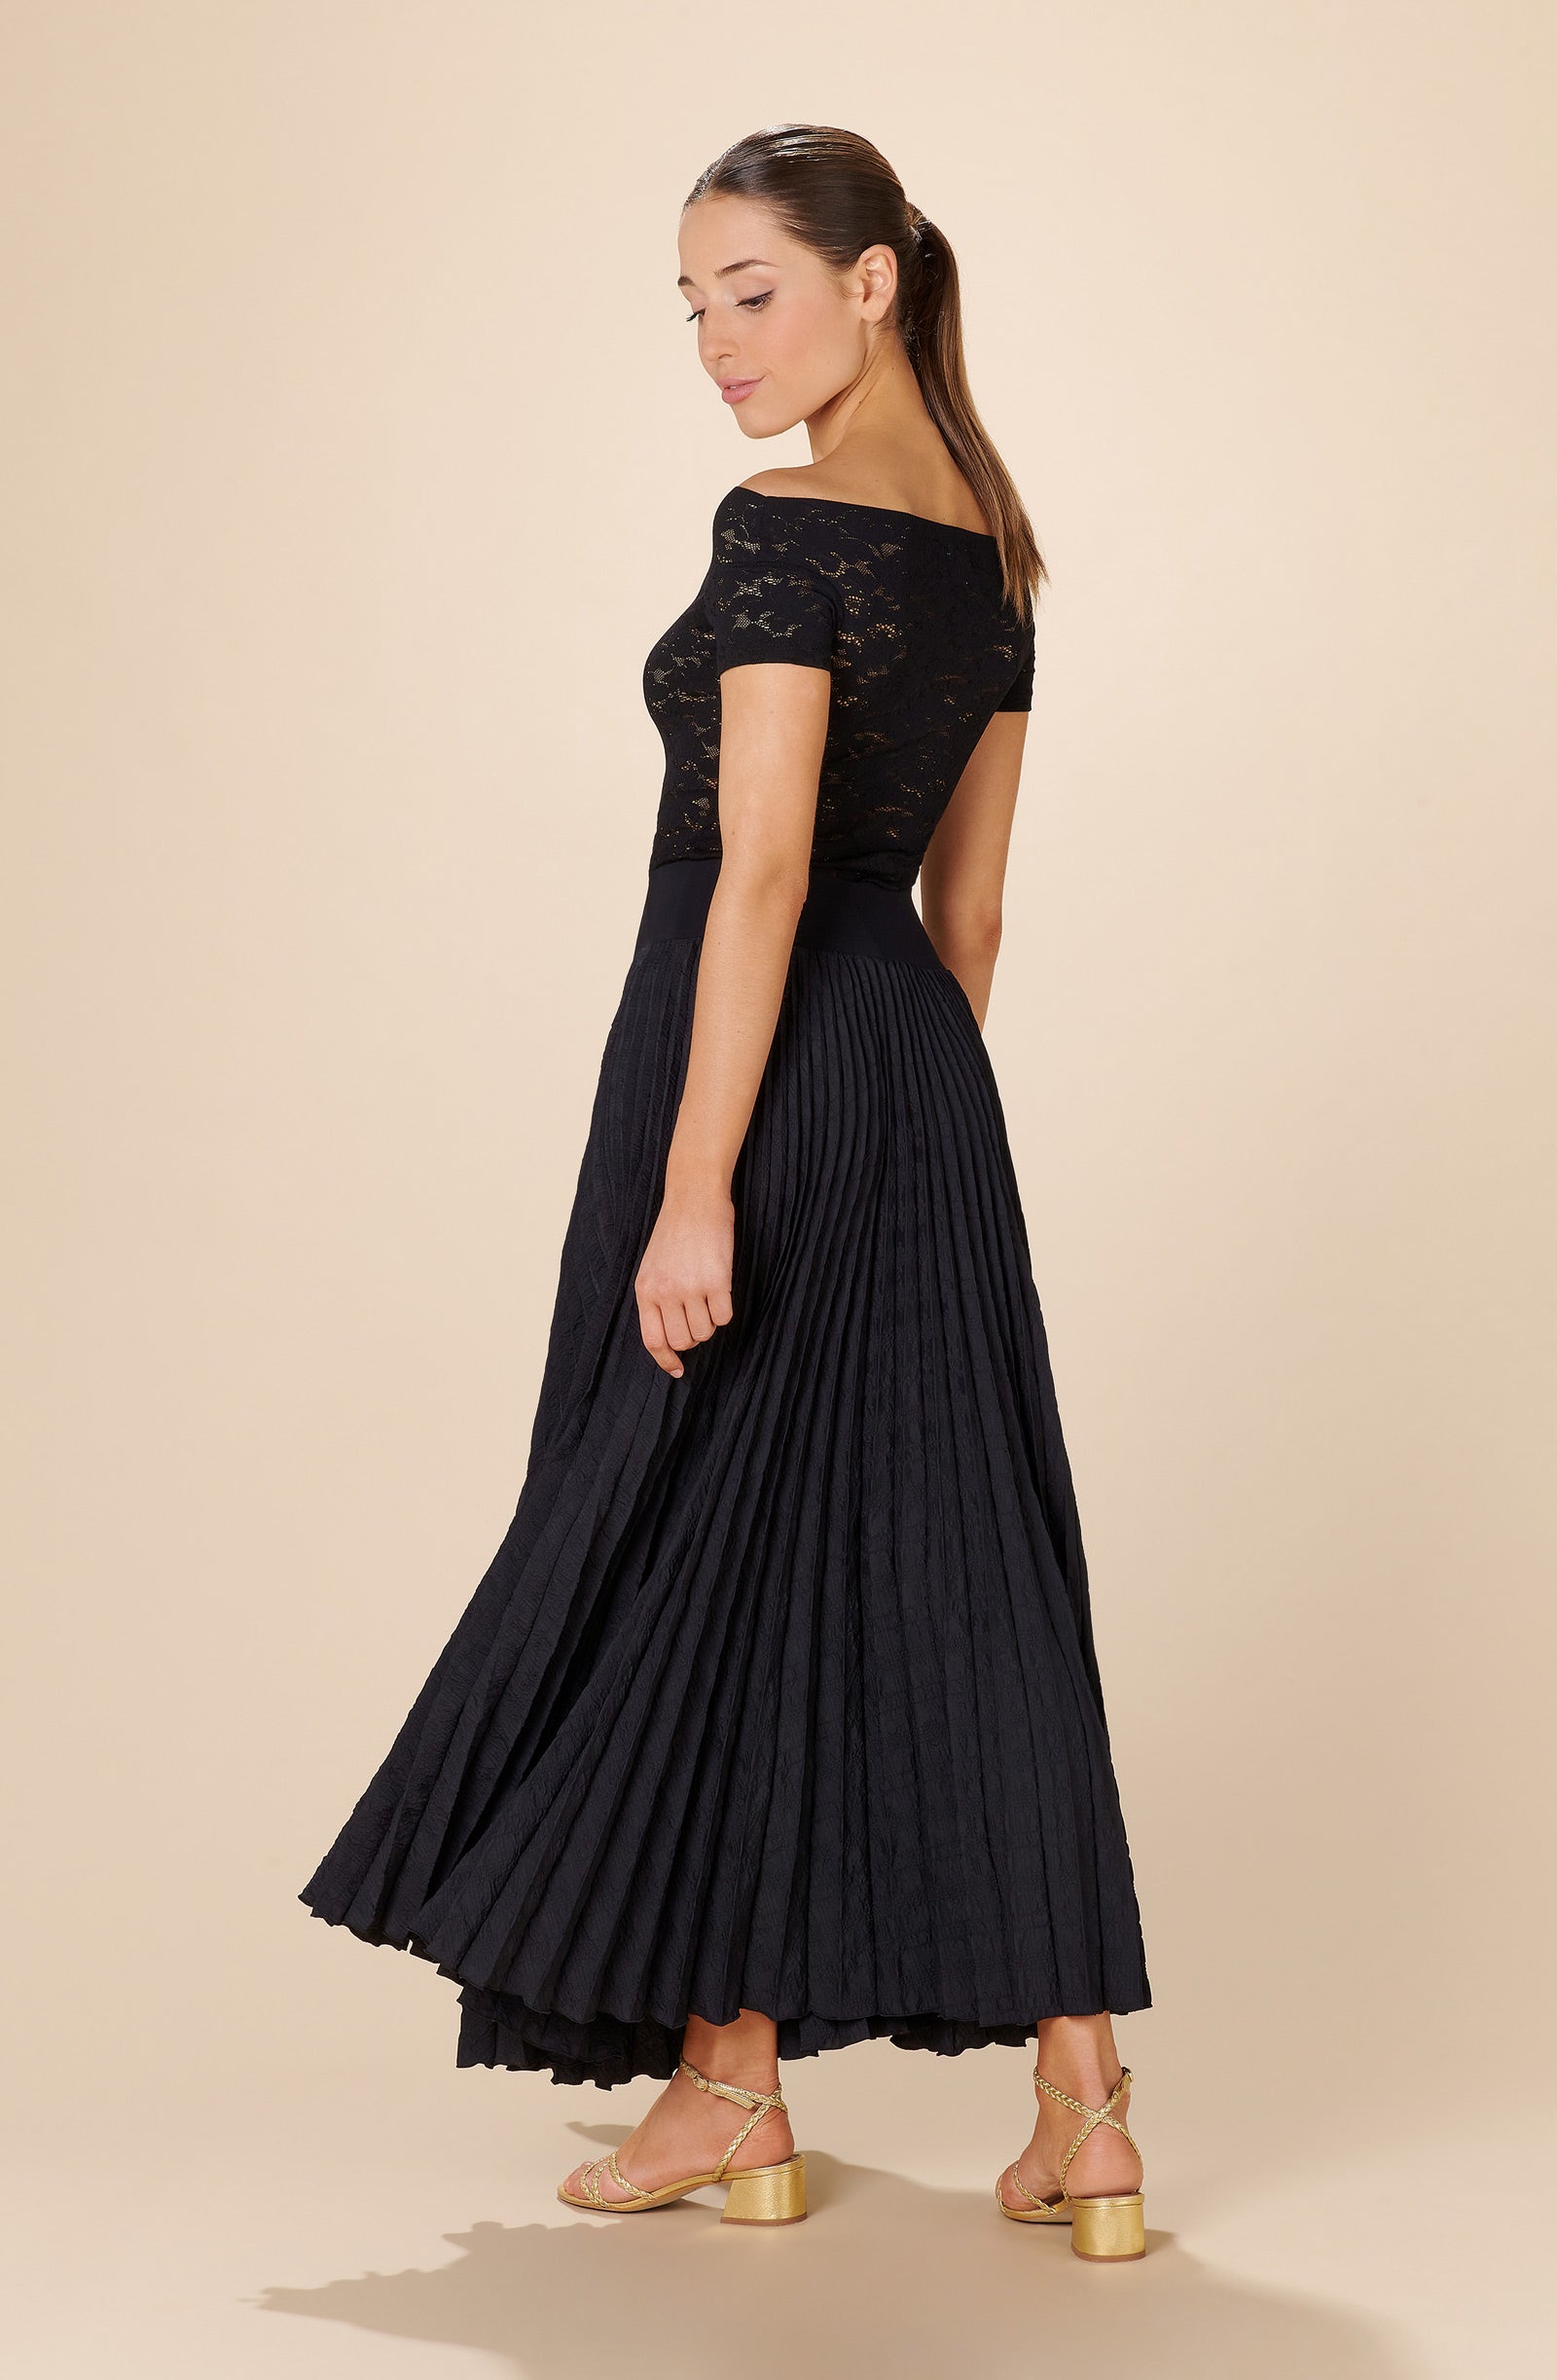 jia Long-black-pleated-skirt